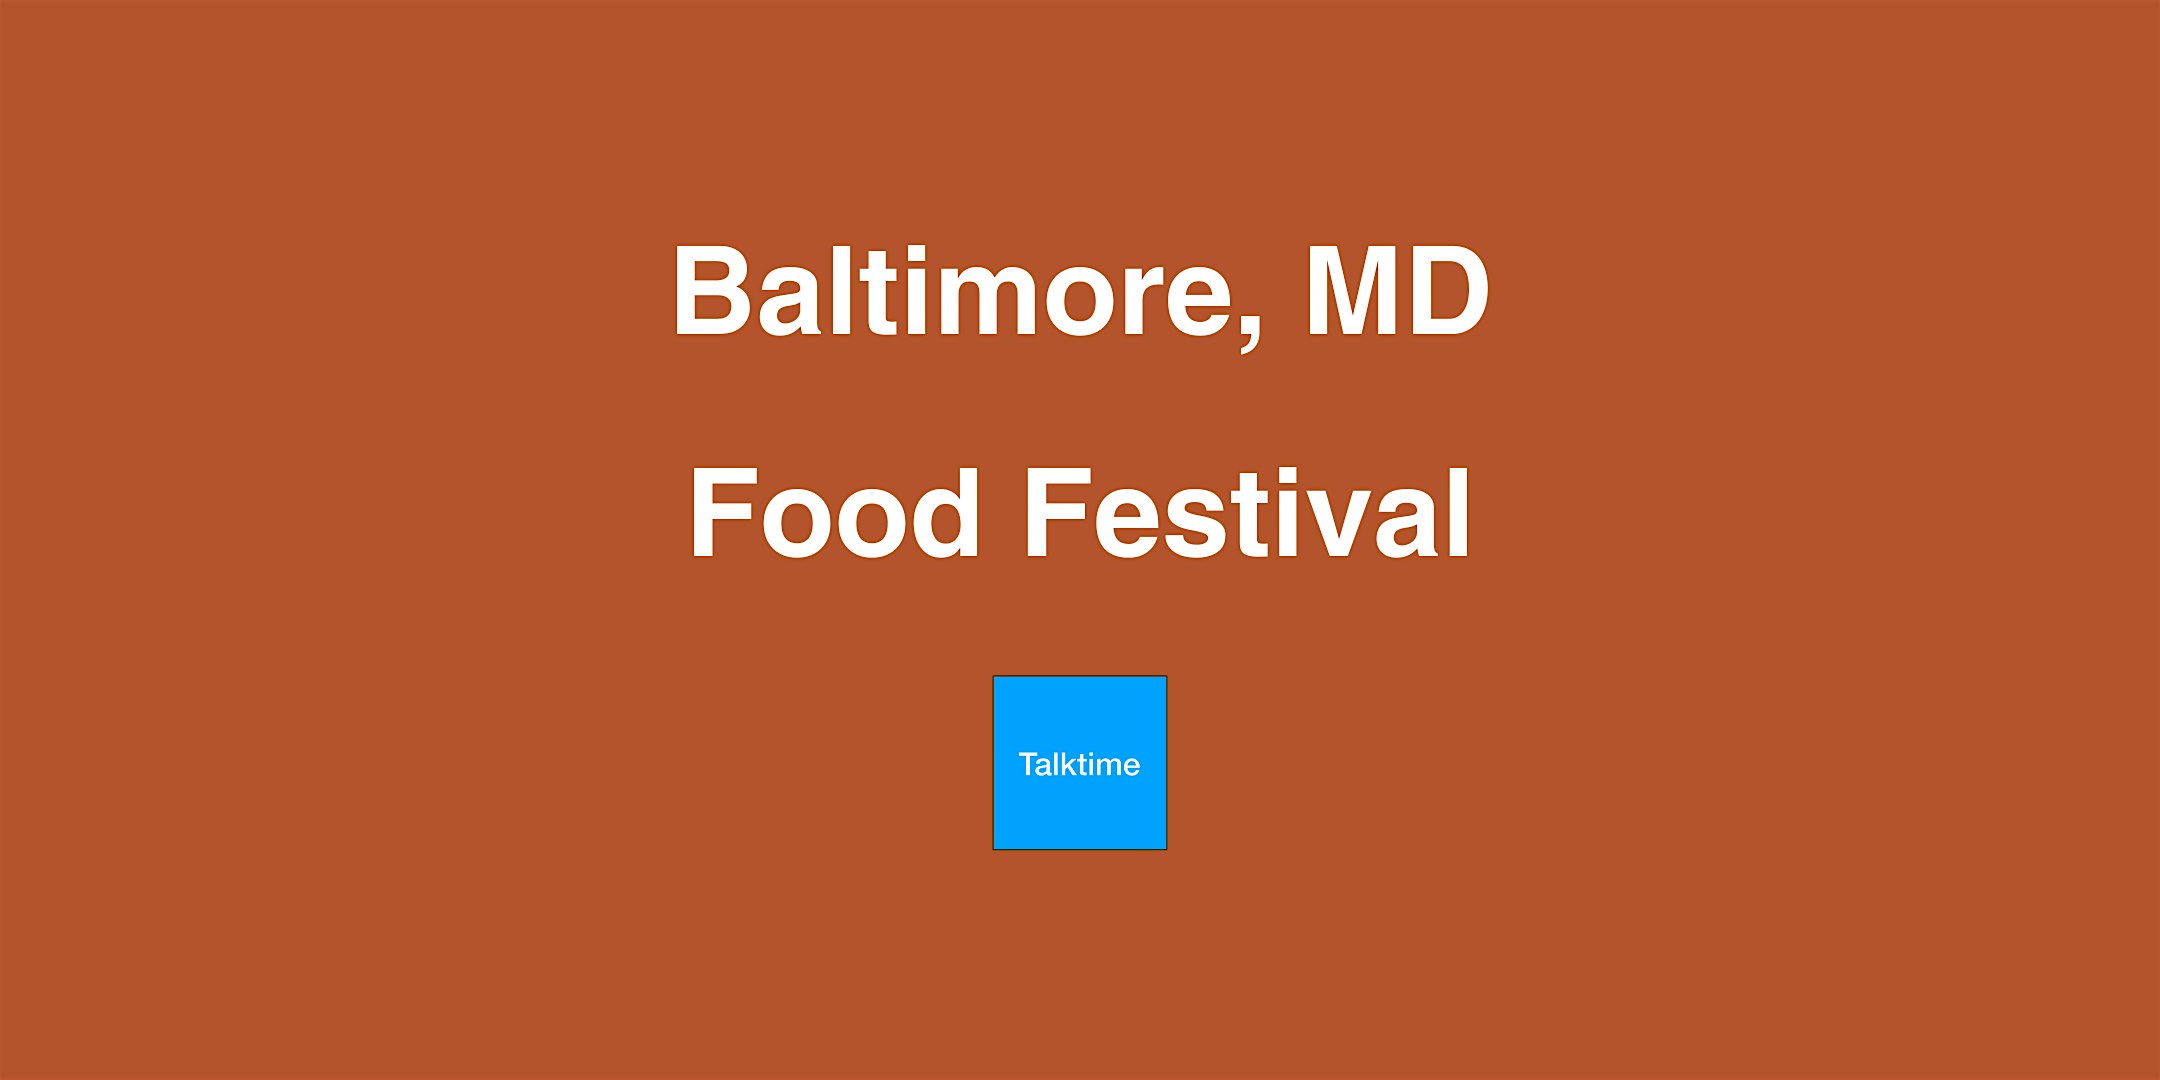 Food Festival - Baltimore